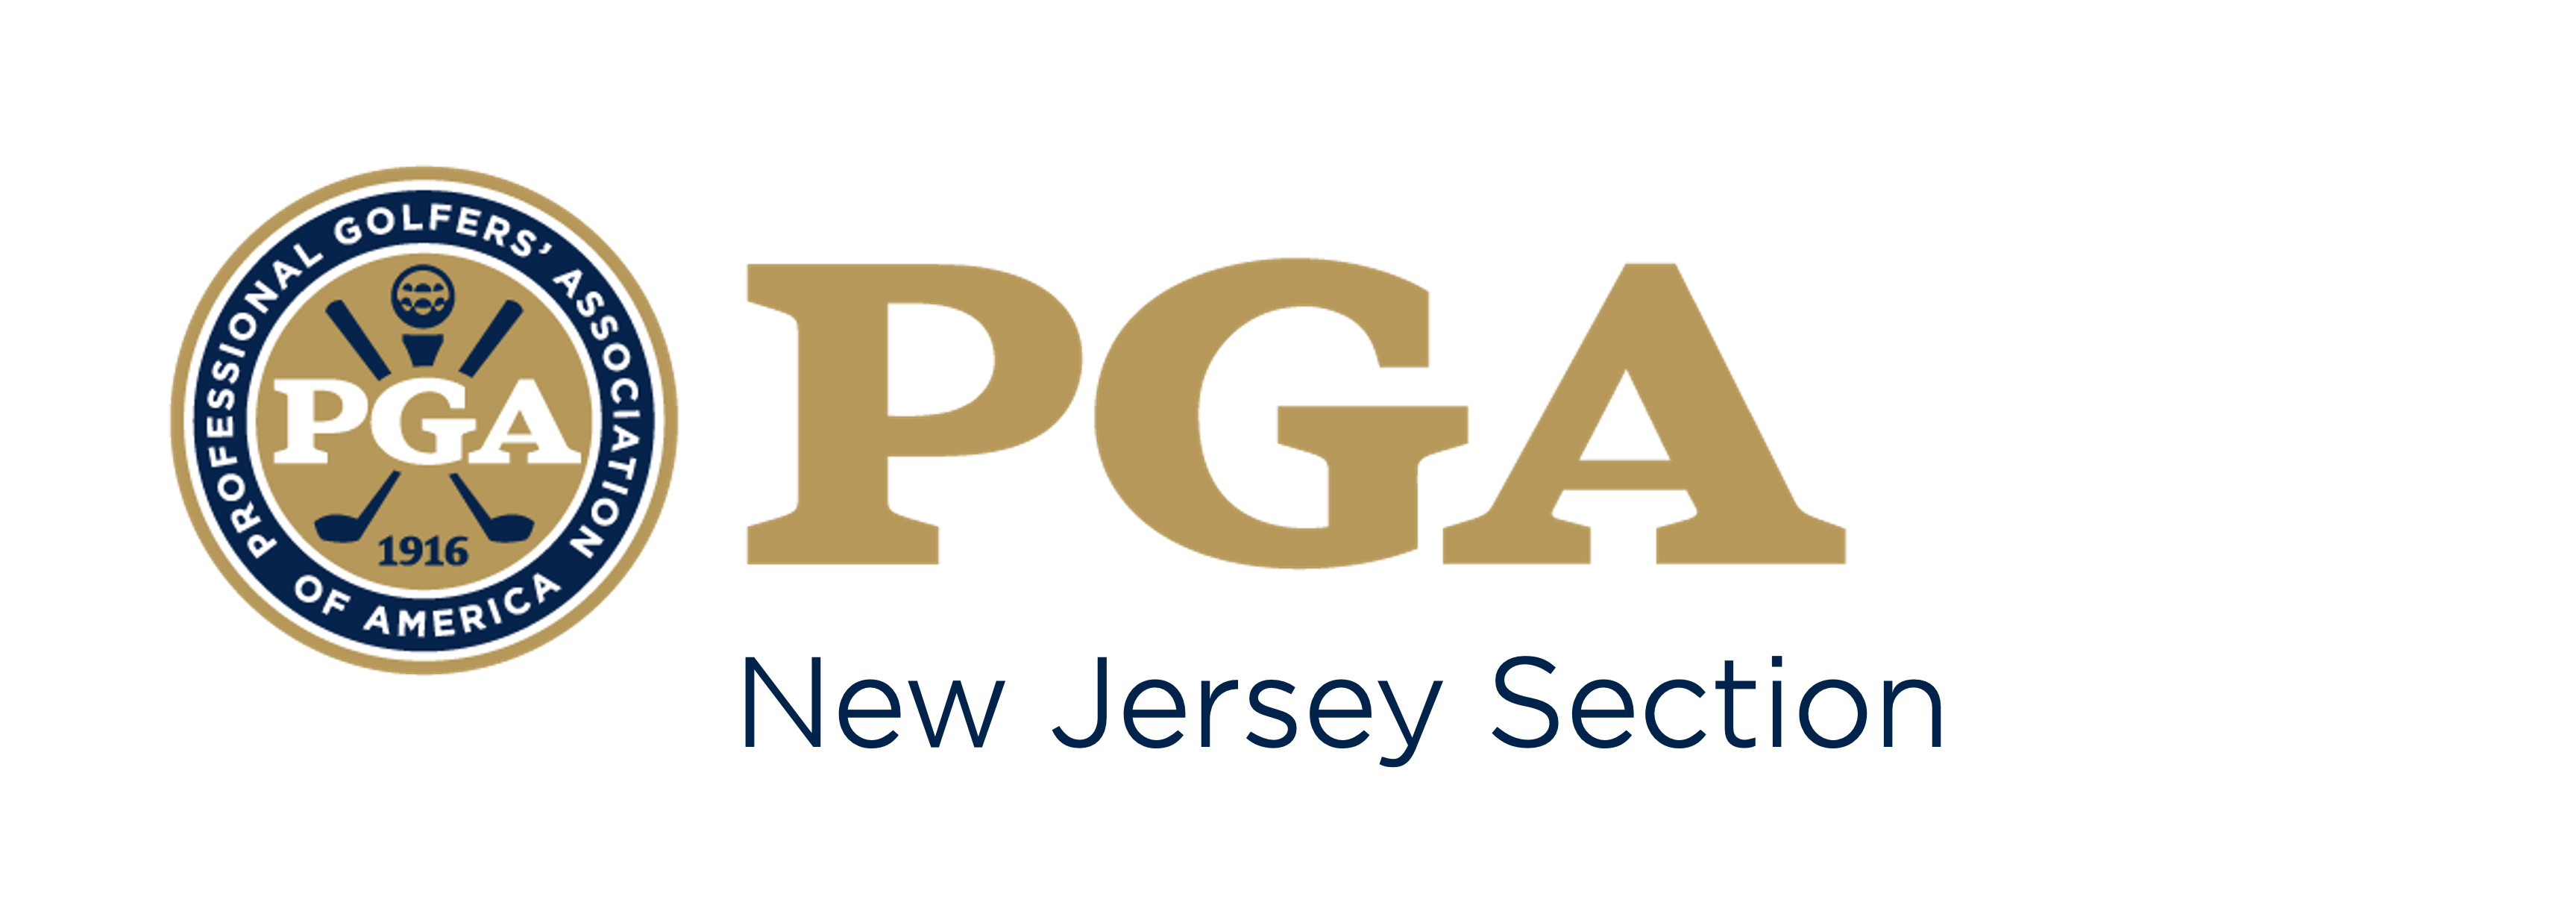 New Jersey PGA Hole In One Program